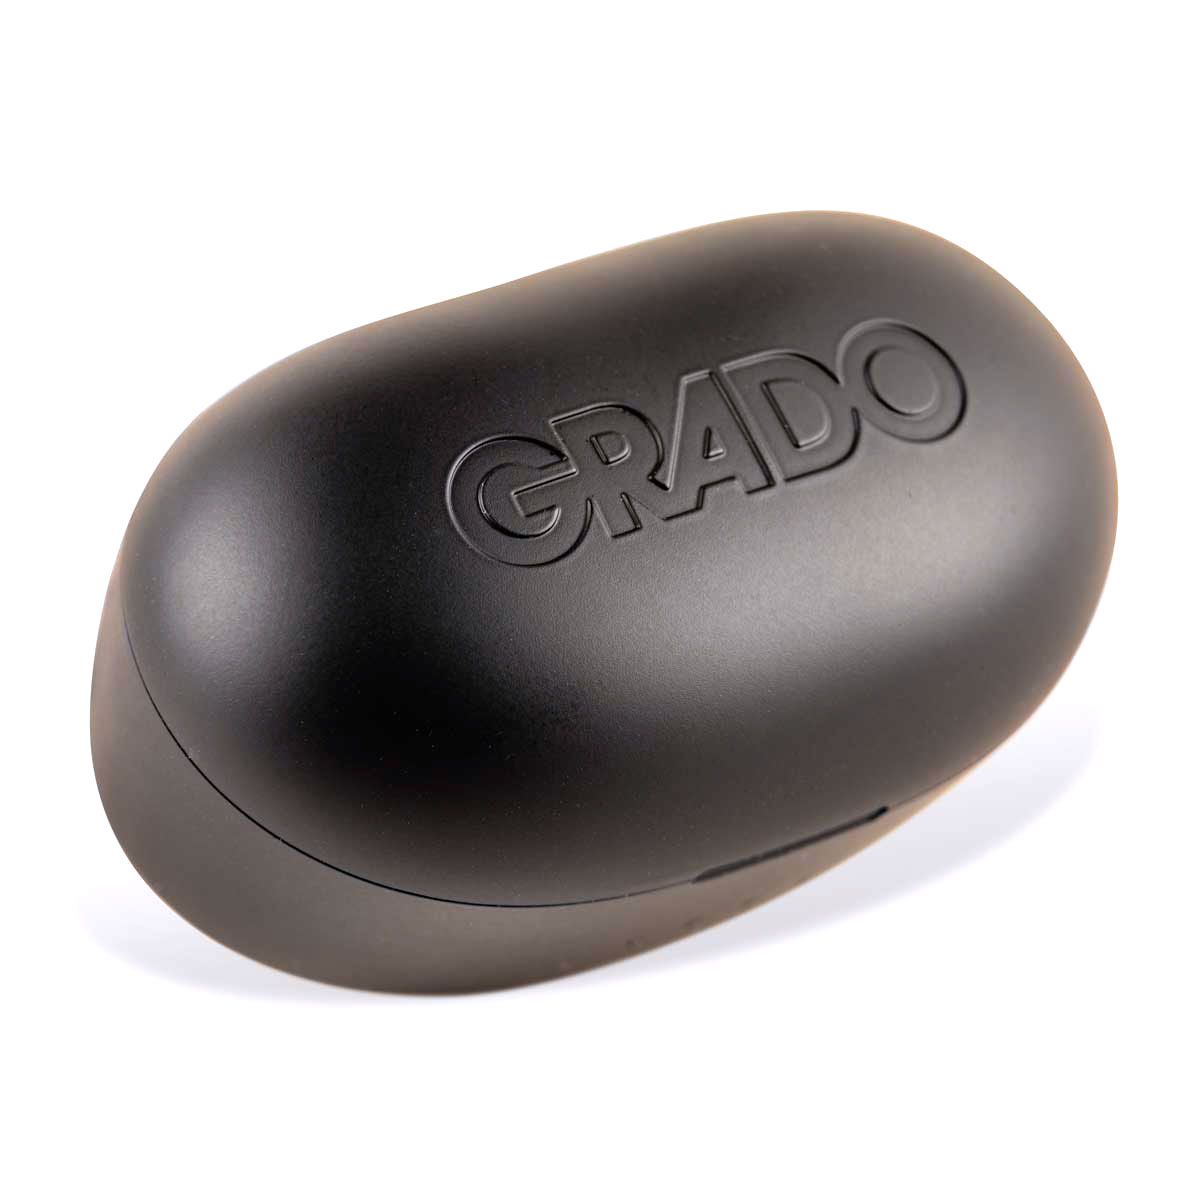 Grado GT220 Wireless Over-Ear Headphones